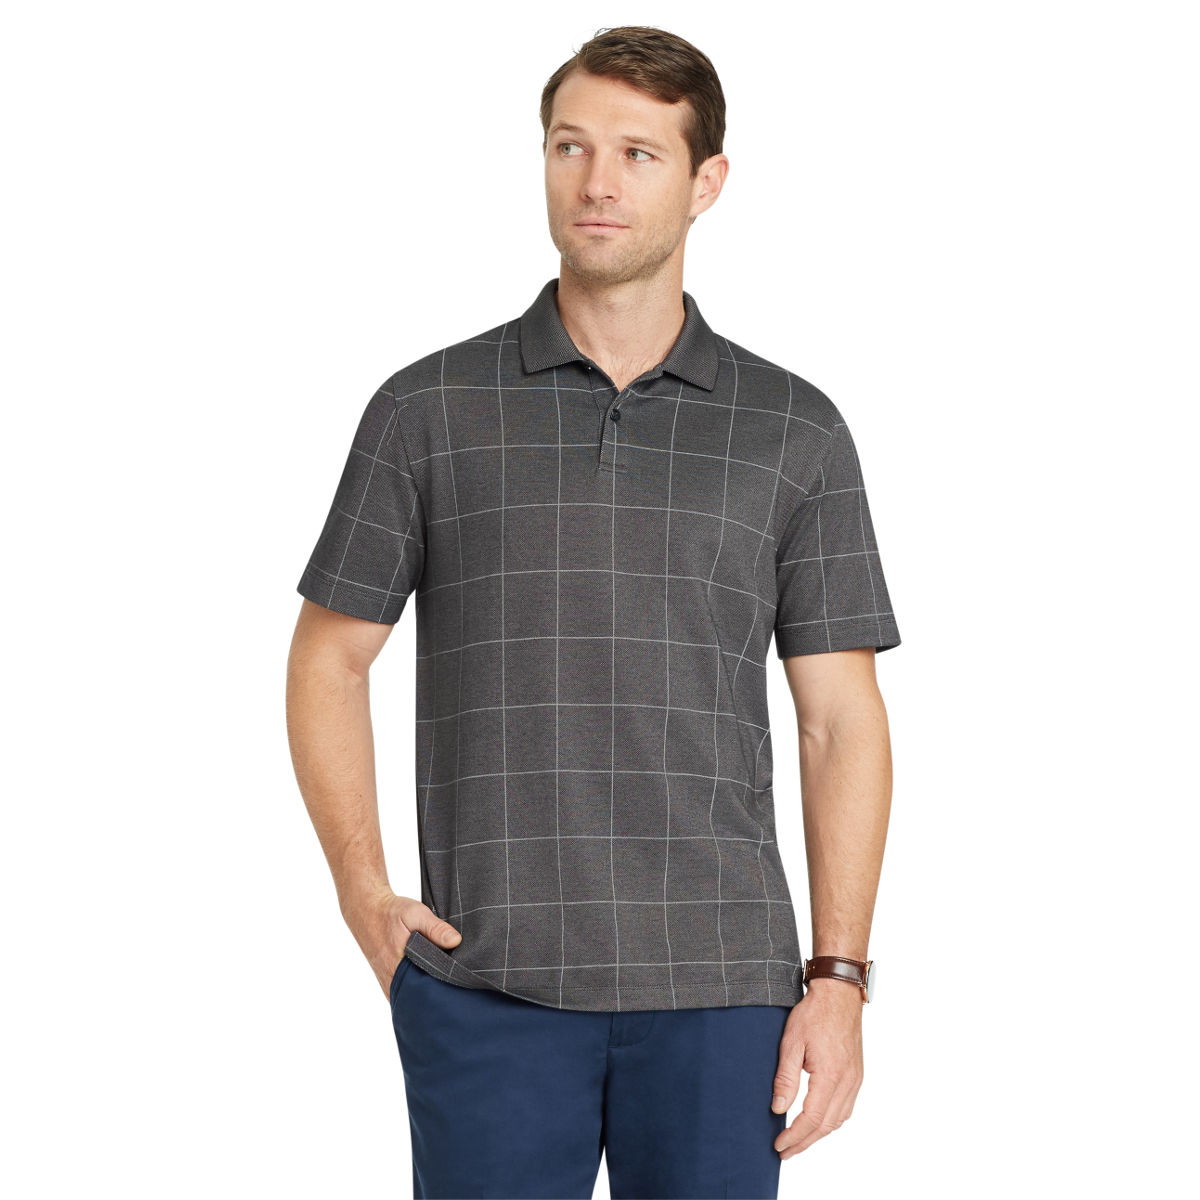 Van Heusen Men's Flex Print Windowpane Short-Sleeve Polo Shirt - Black, M